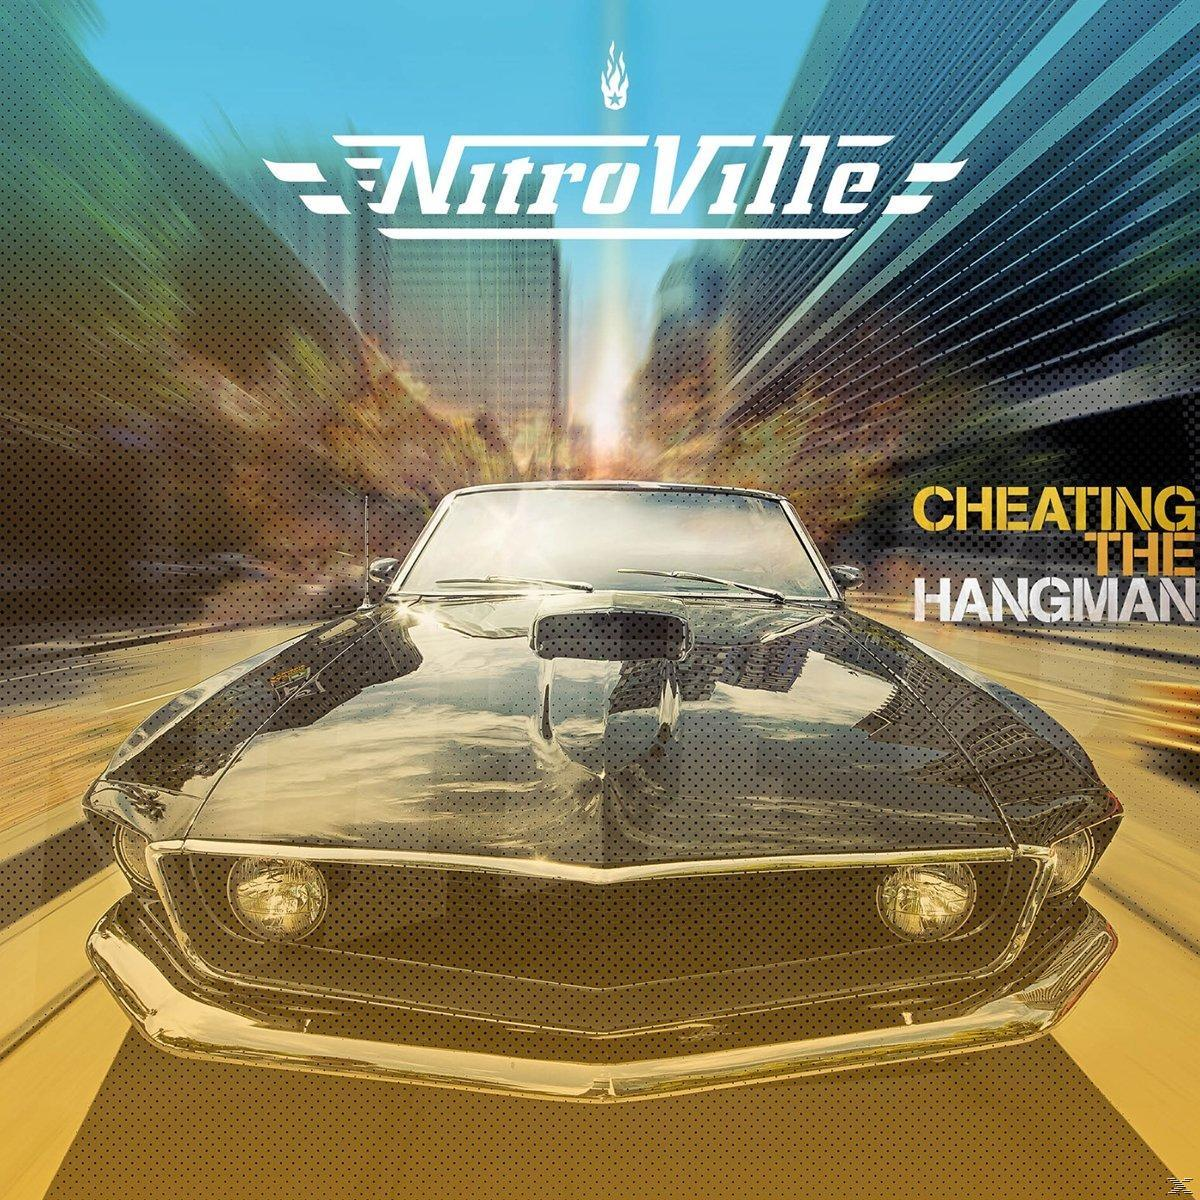 Nitroville The Cheating - Hangman - (Vinyl)